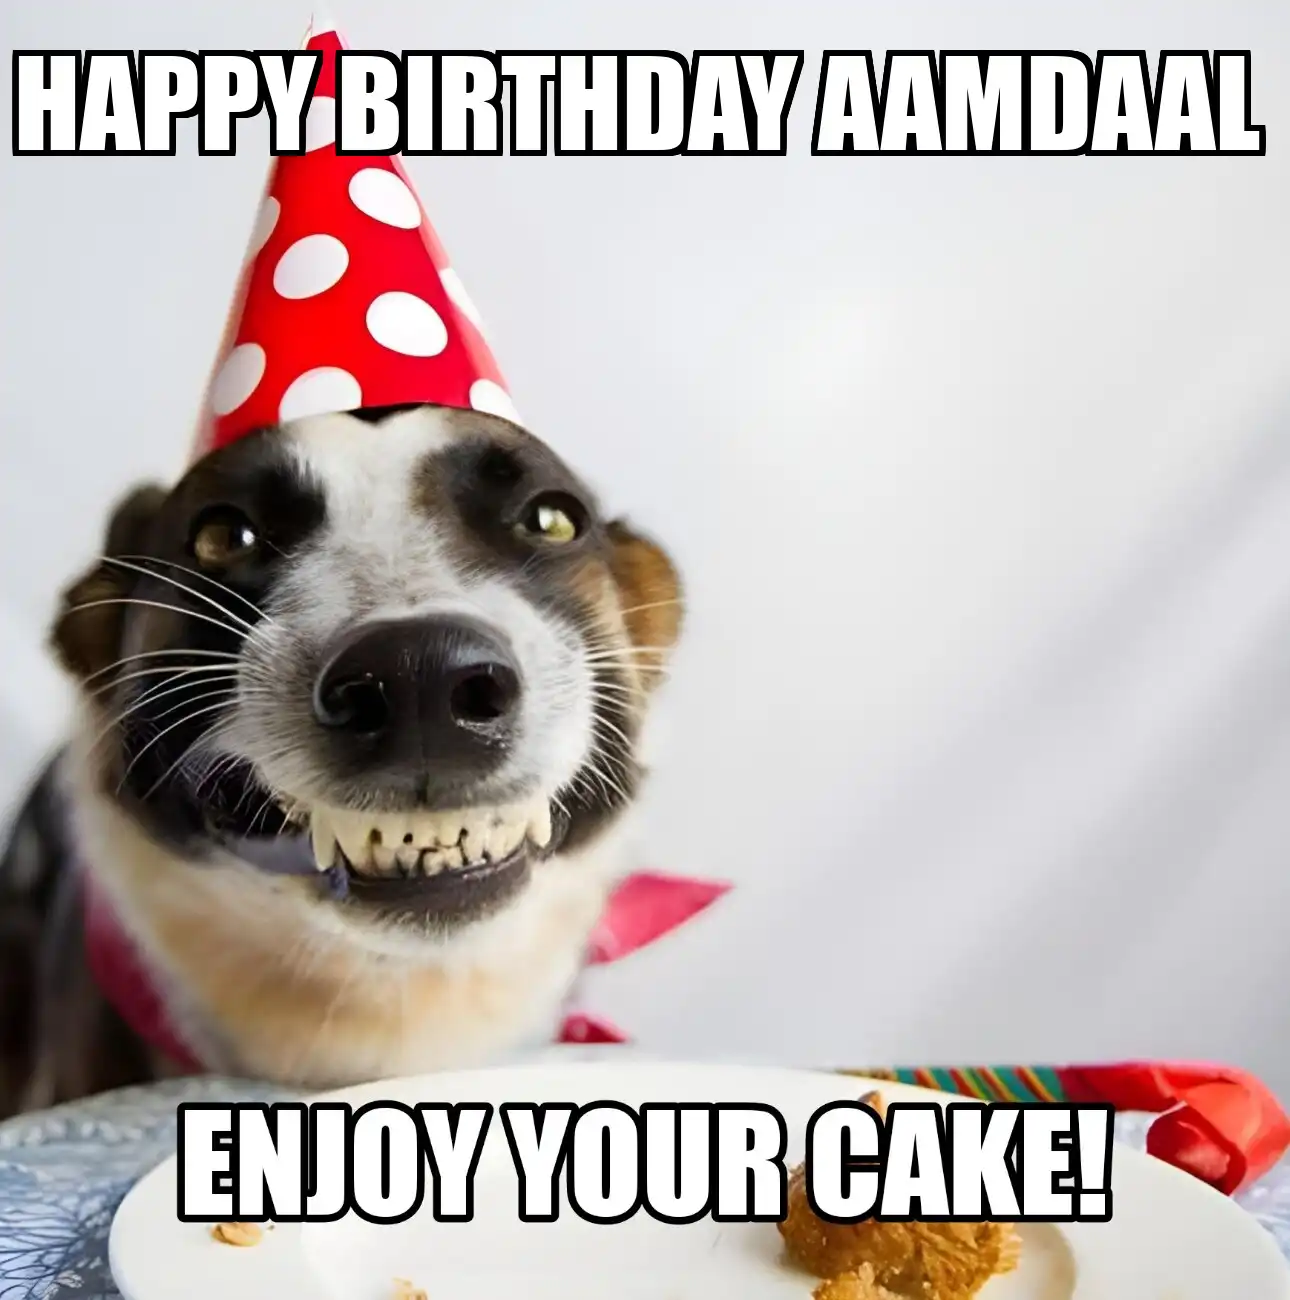 Happy Birthday Aamdaal Enjoy Your Cake Dog Meme